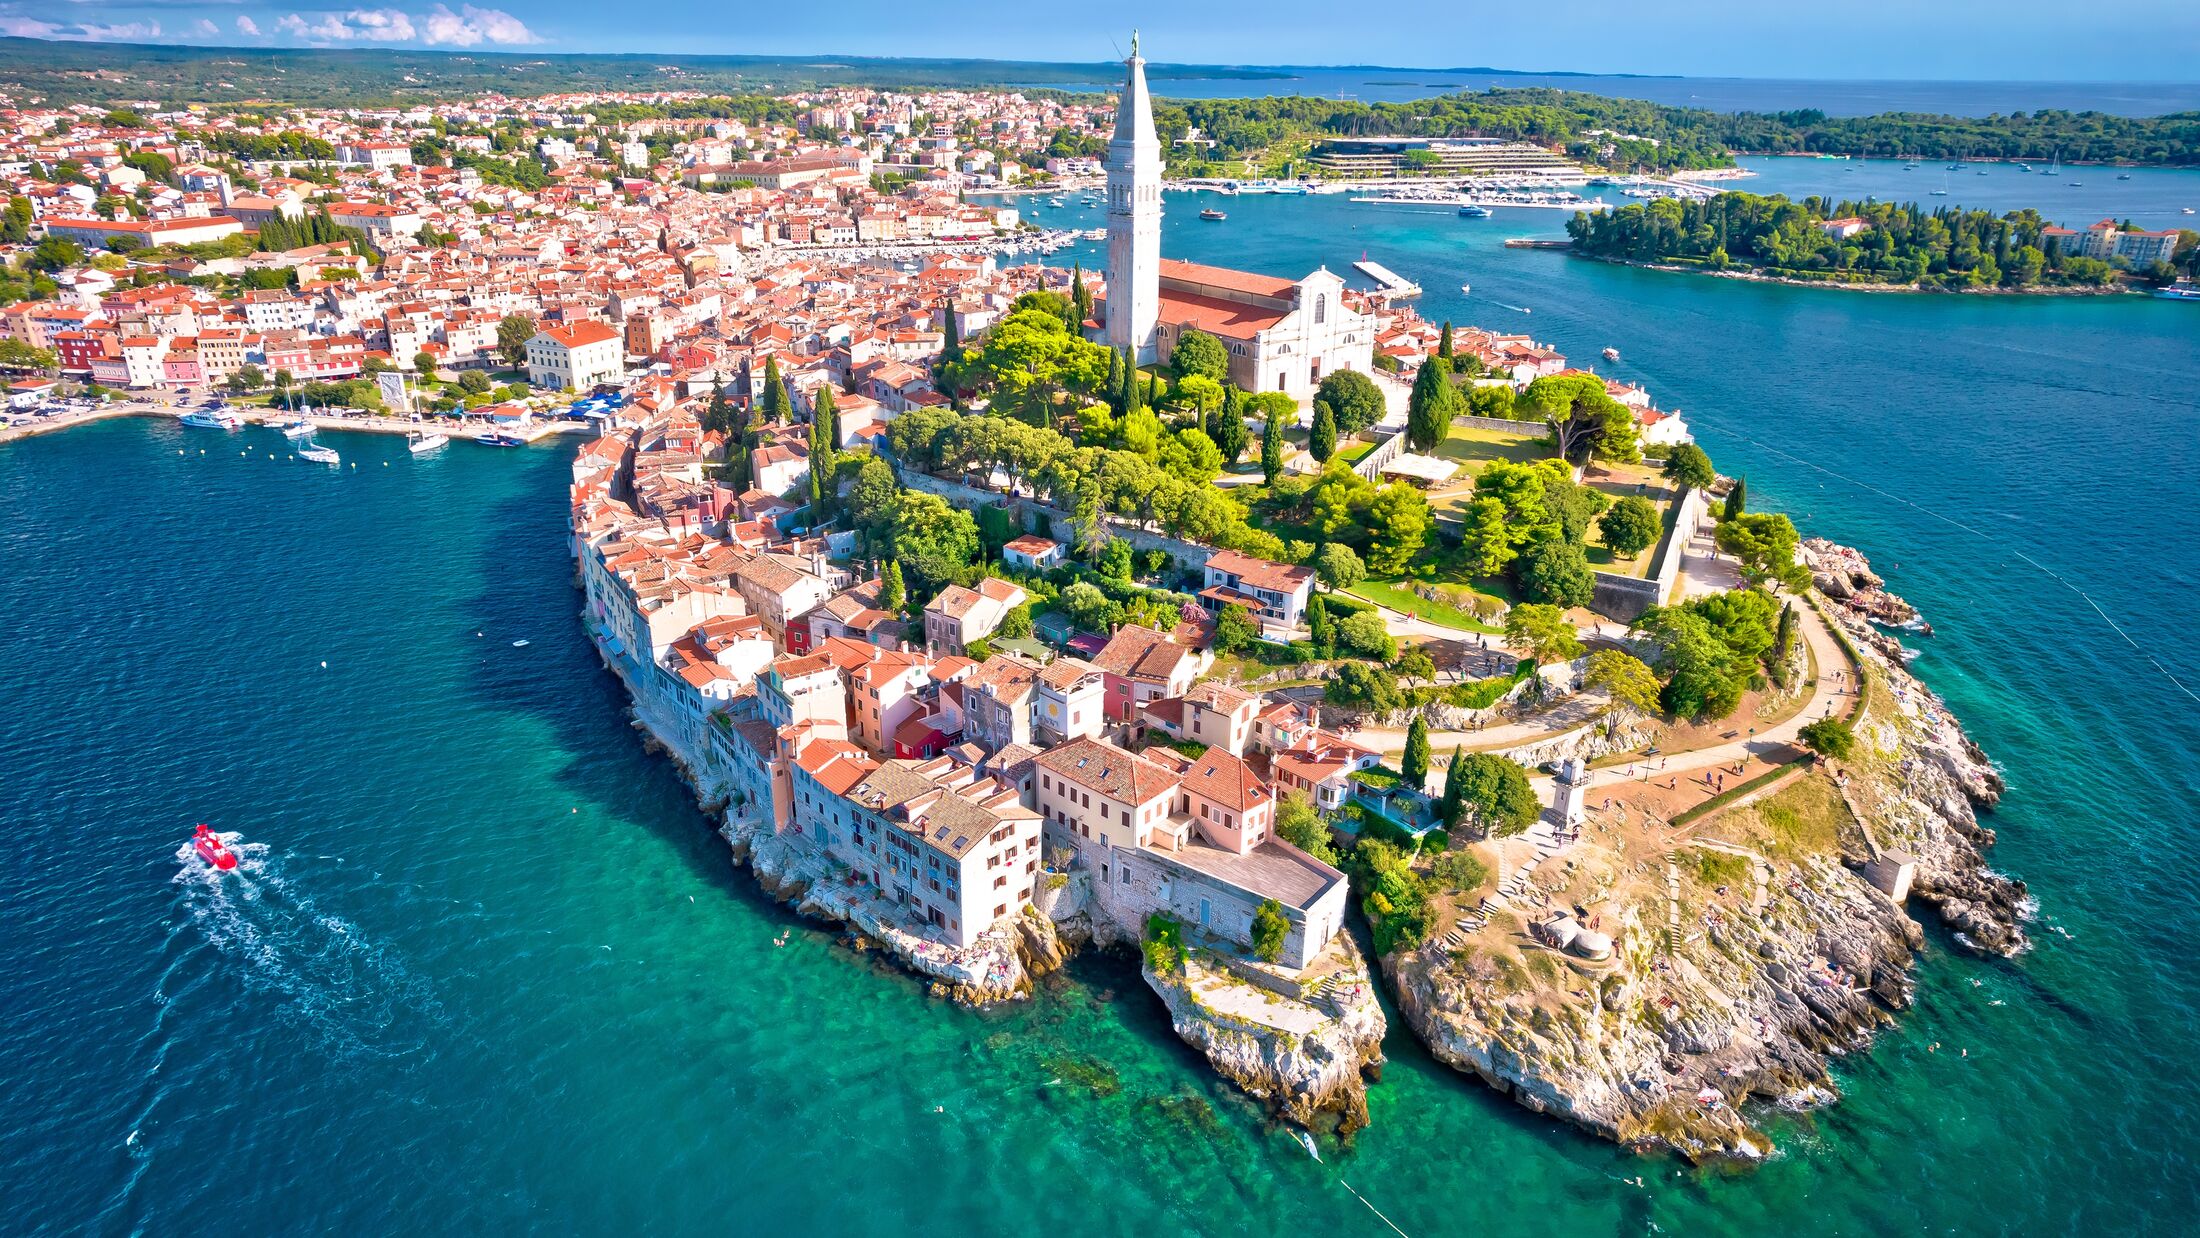 Town of Rovinj historic peninsula aerial view, famous tourist destination in Istria region of Croatia